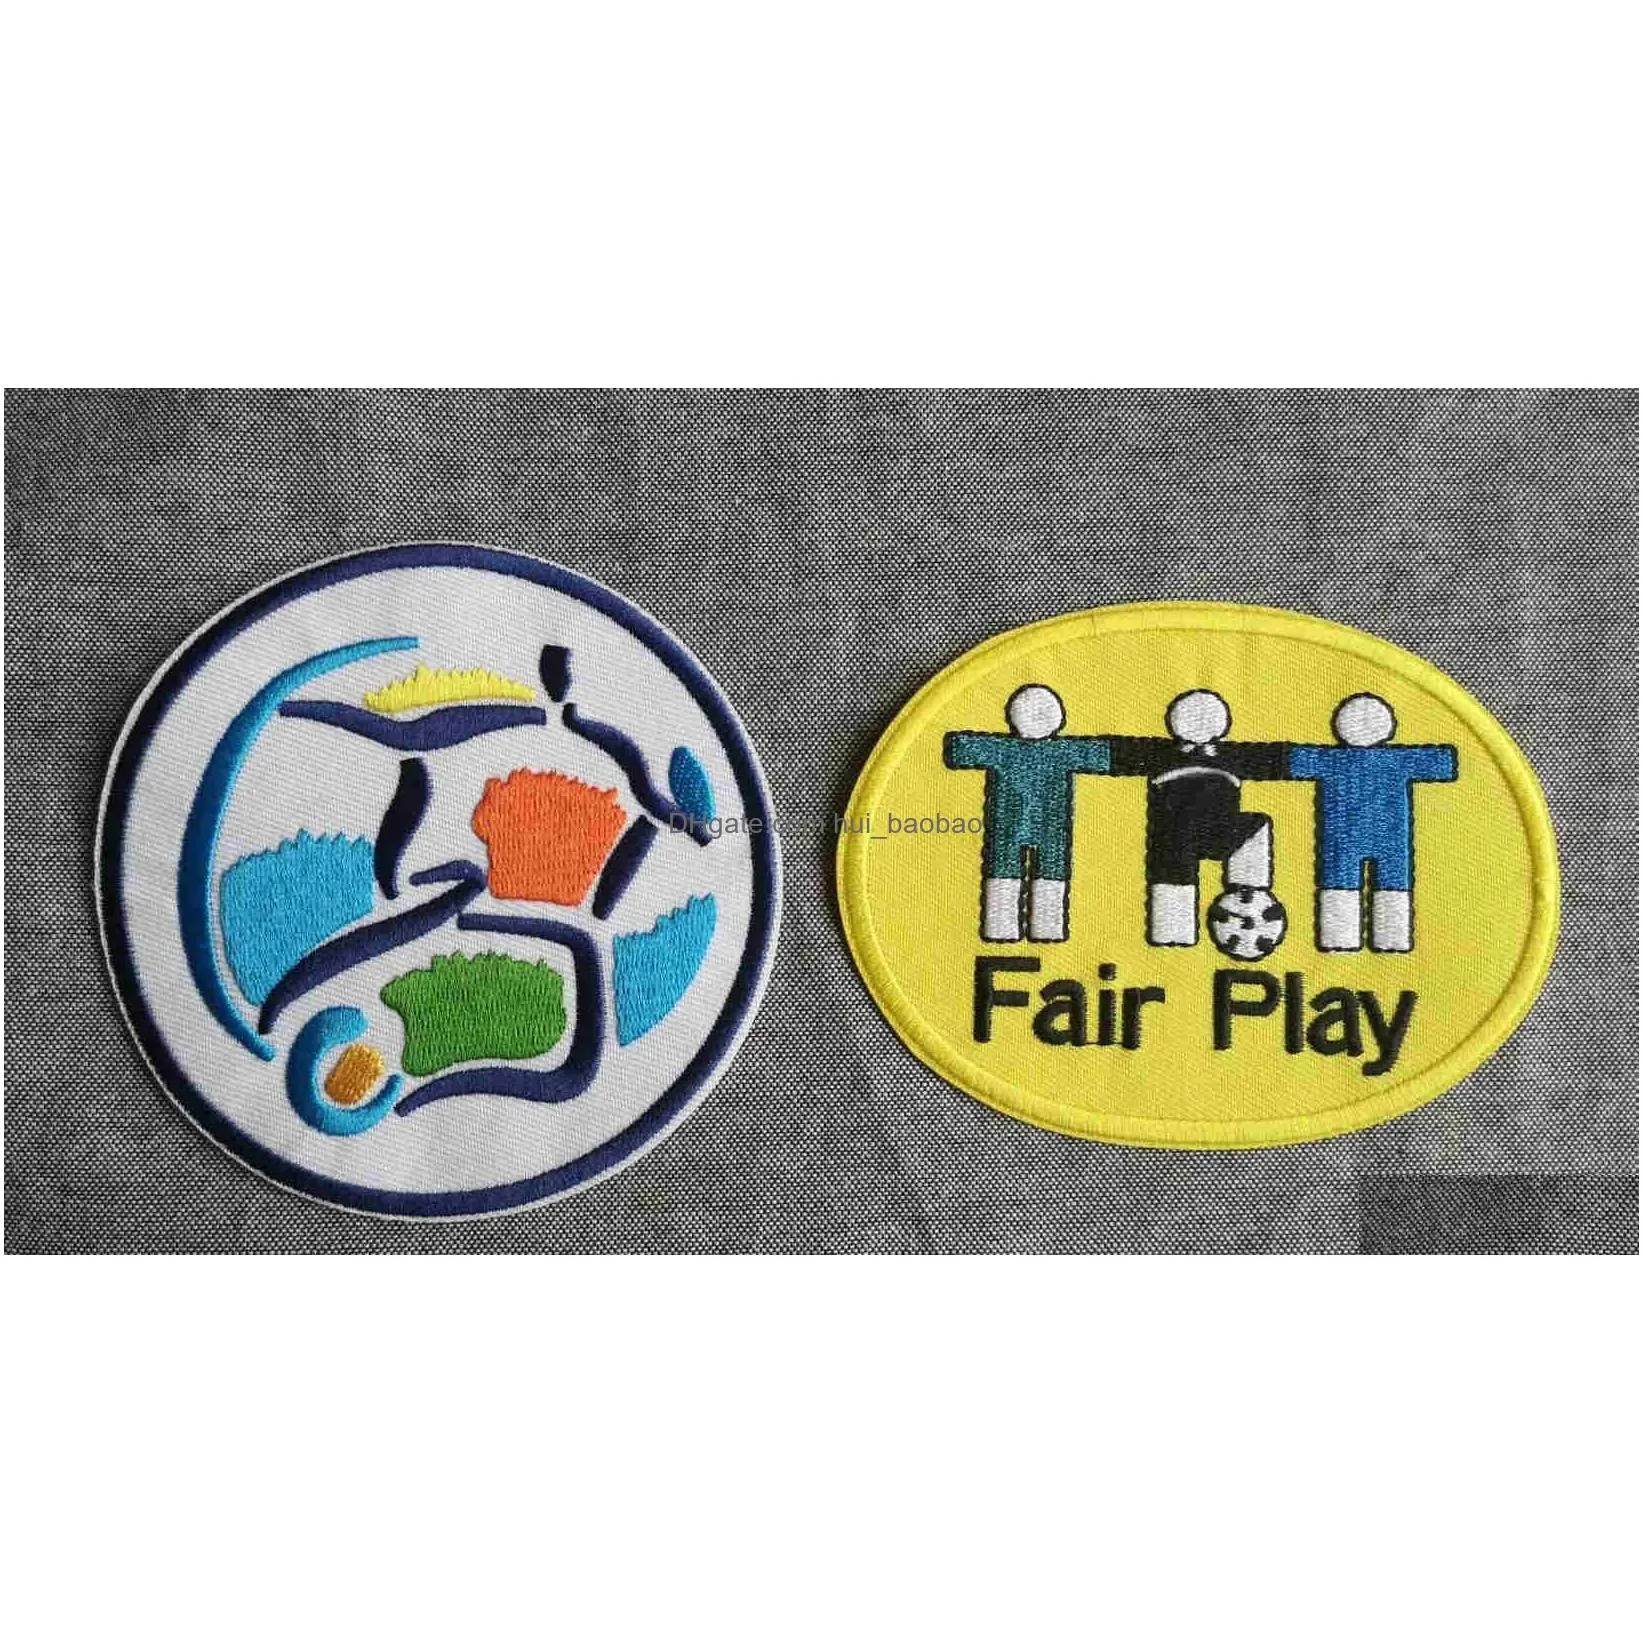 souvenirs retro european 1996 200 2004 euro football printes badges soccer stamping badges